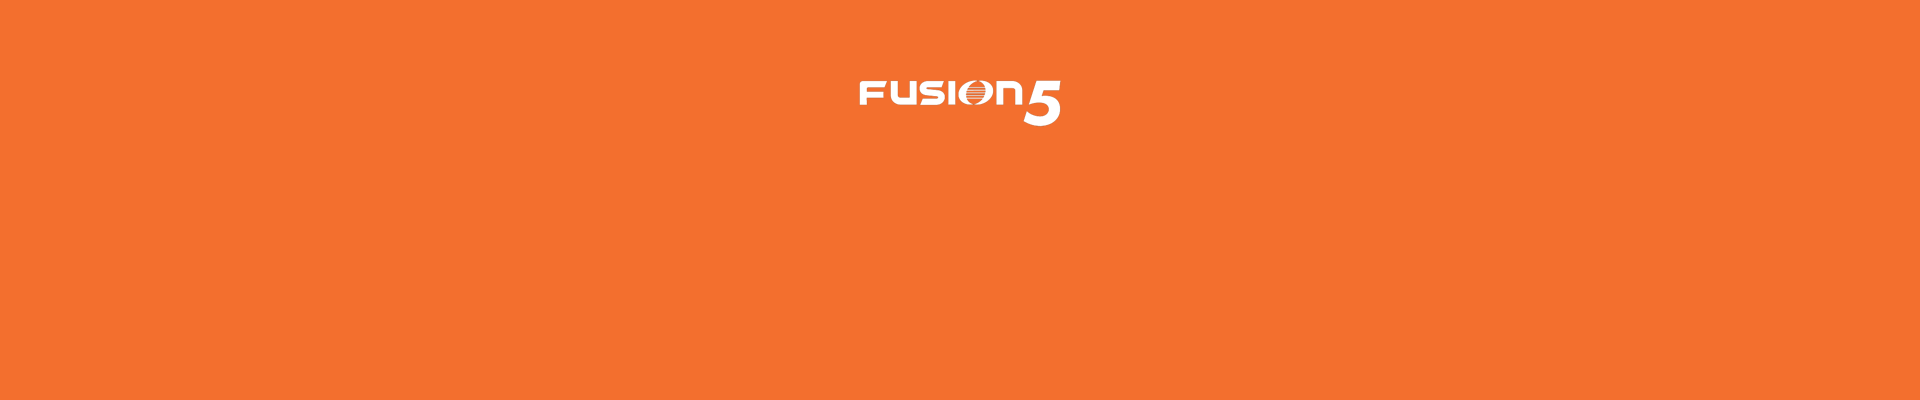 Fusion5 text on orange background | Gillette UK